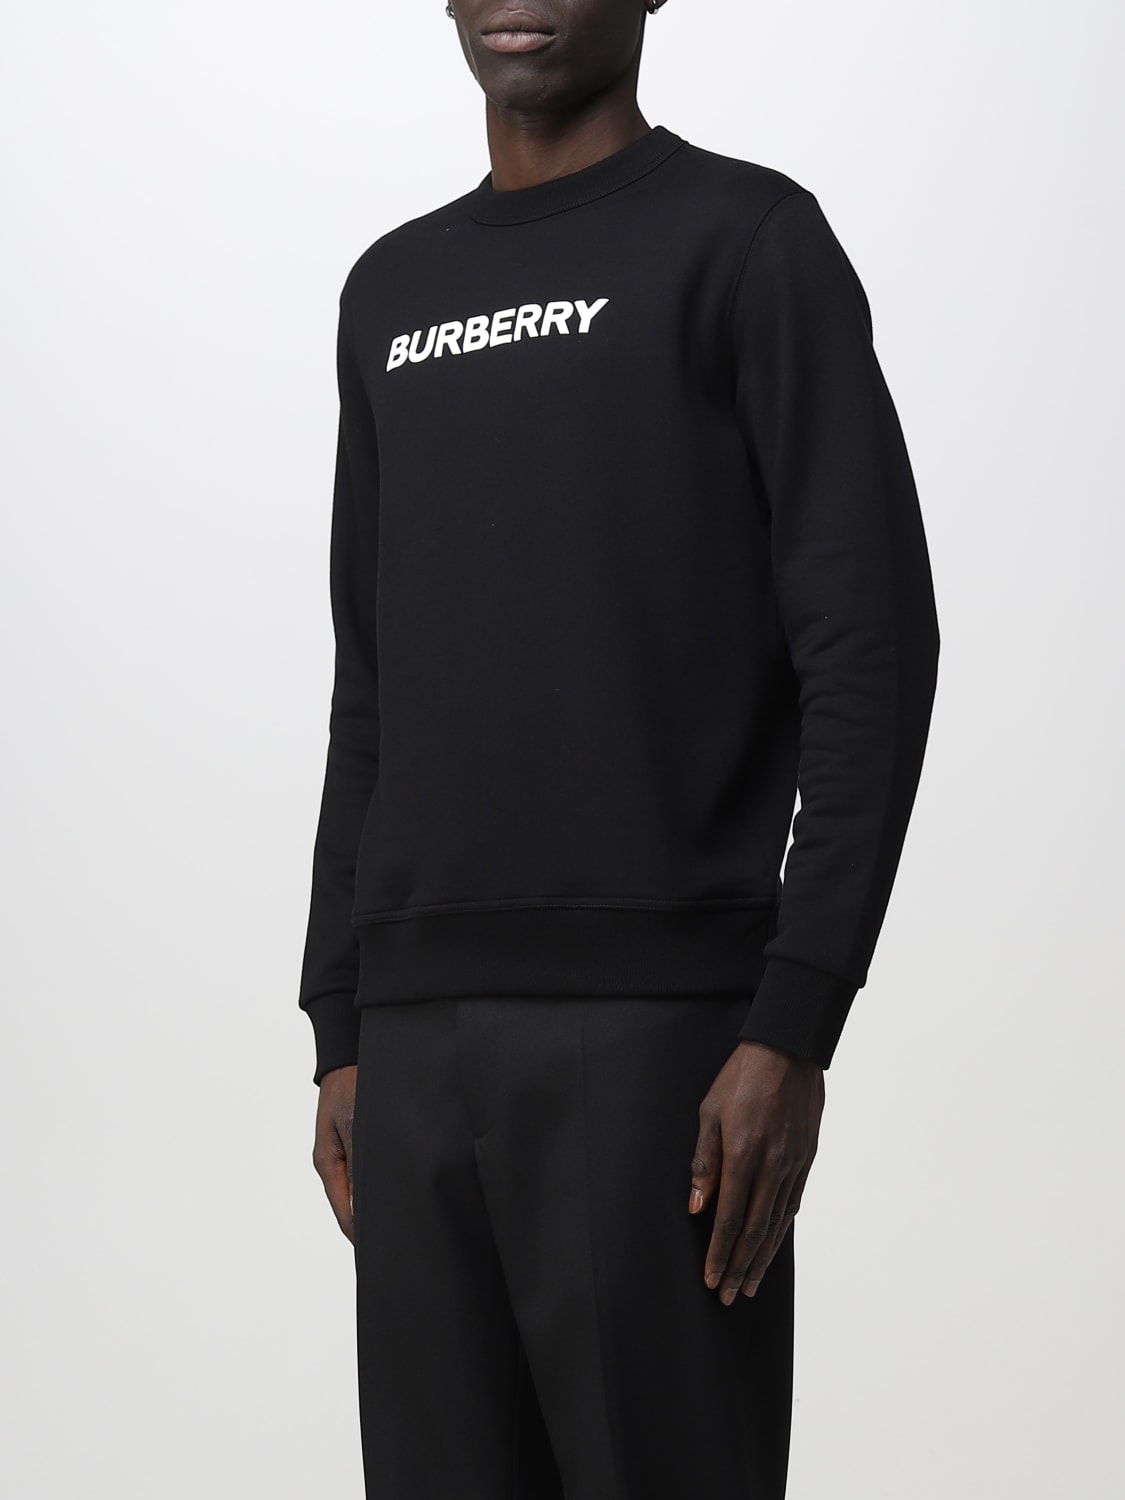 Duchess Også Betaling Burberry Outlet: sweatshirt in cotton - Black | Burberry sweatshirt 8055312  online at GIGLIO.COM